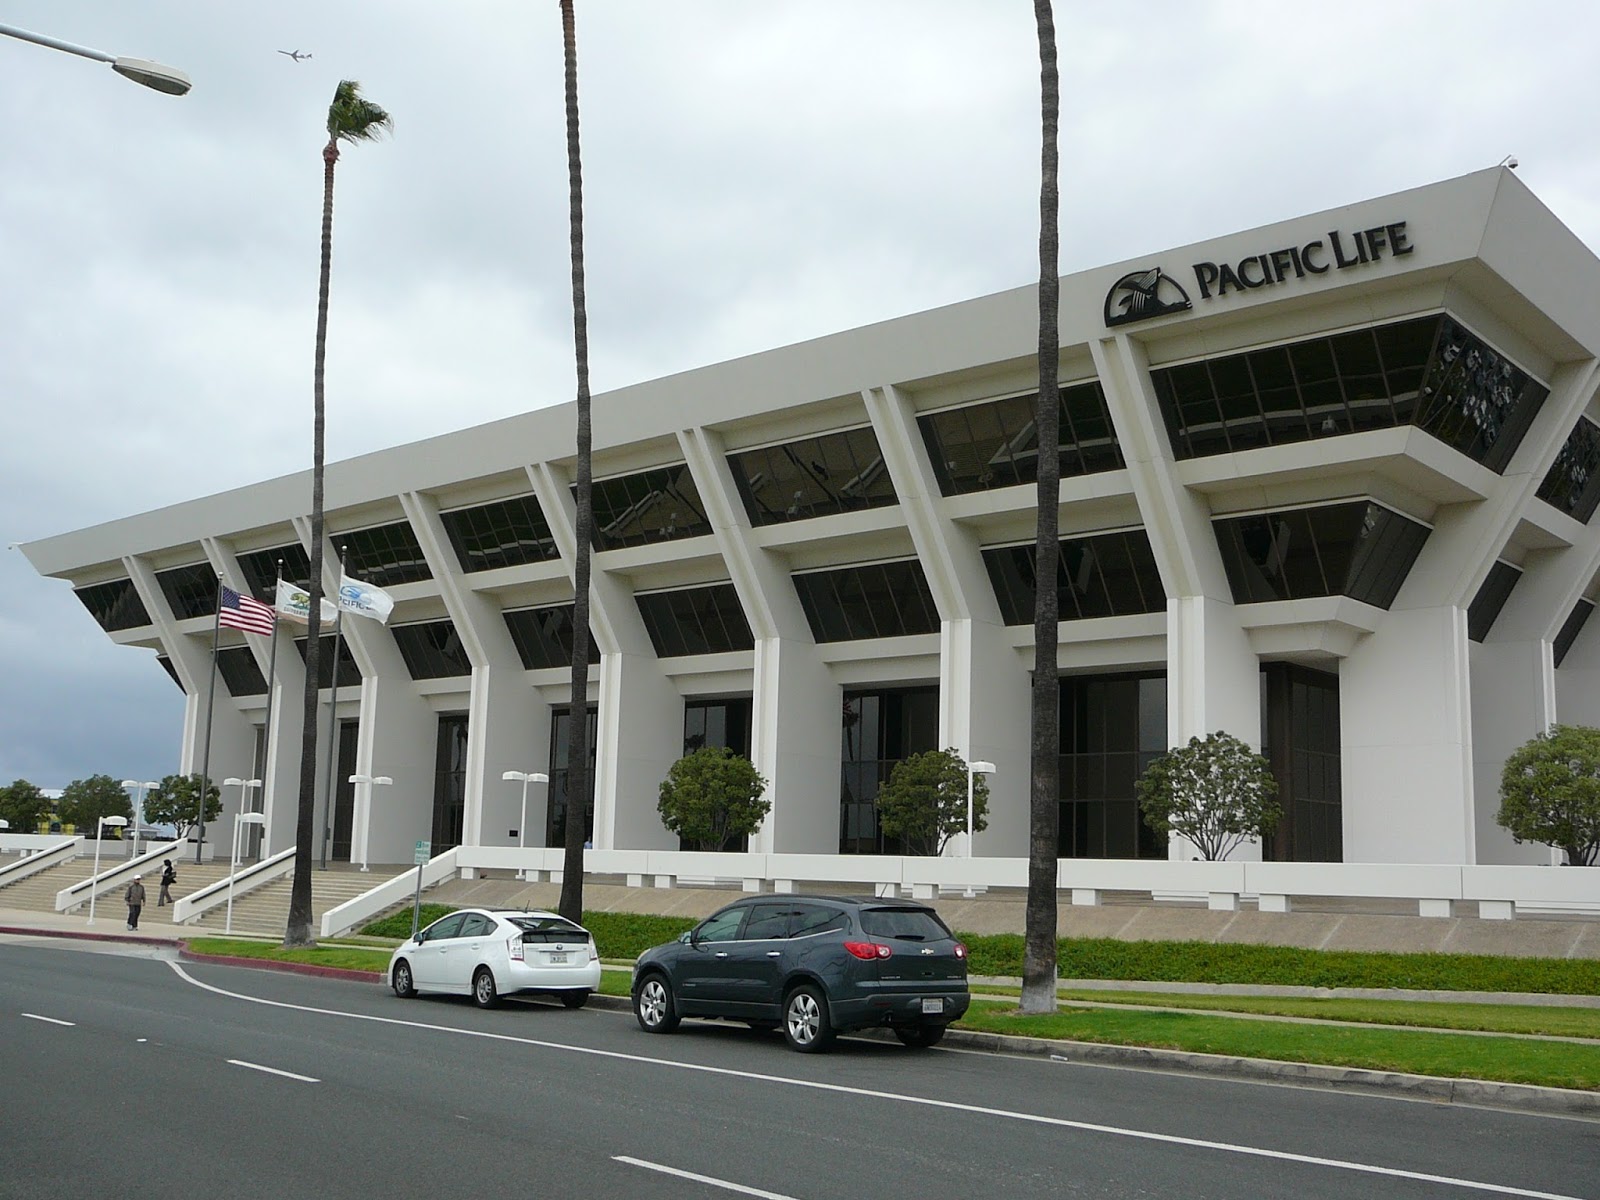 AB Capital moving its headquarters to Newport Center, near Fashion Island  in Newport Beach, CA - AB Capital